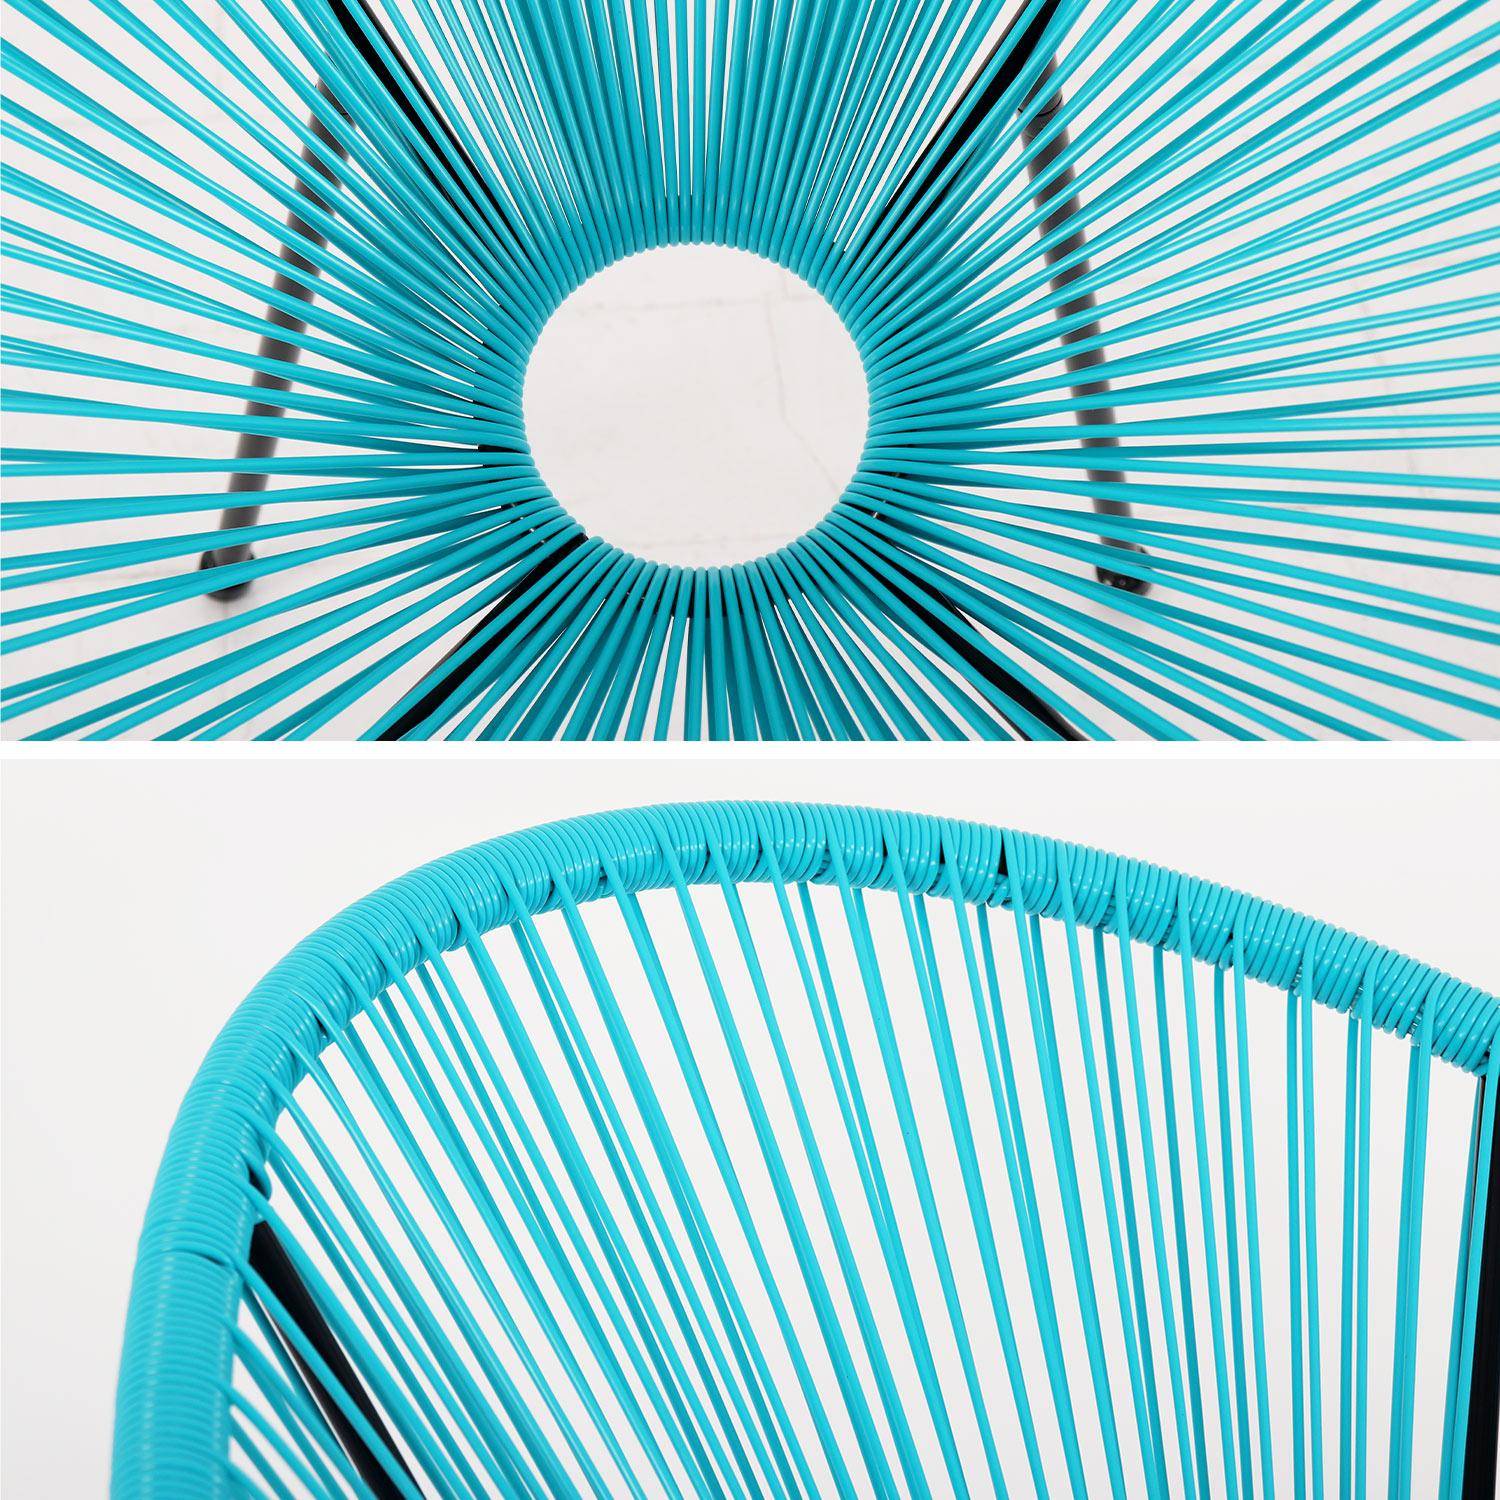 Poltrona ACAPULCO em forma de ovo - Turquesa - Poltrona de design retro 4 pernas, corda de plástico, interior/exterior Photo4